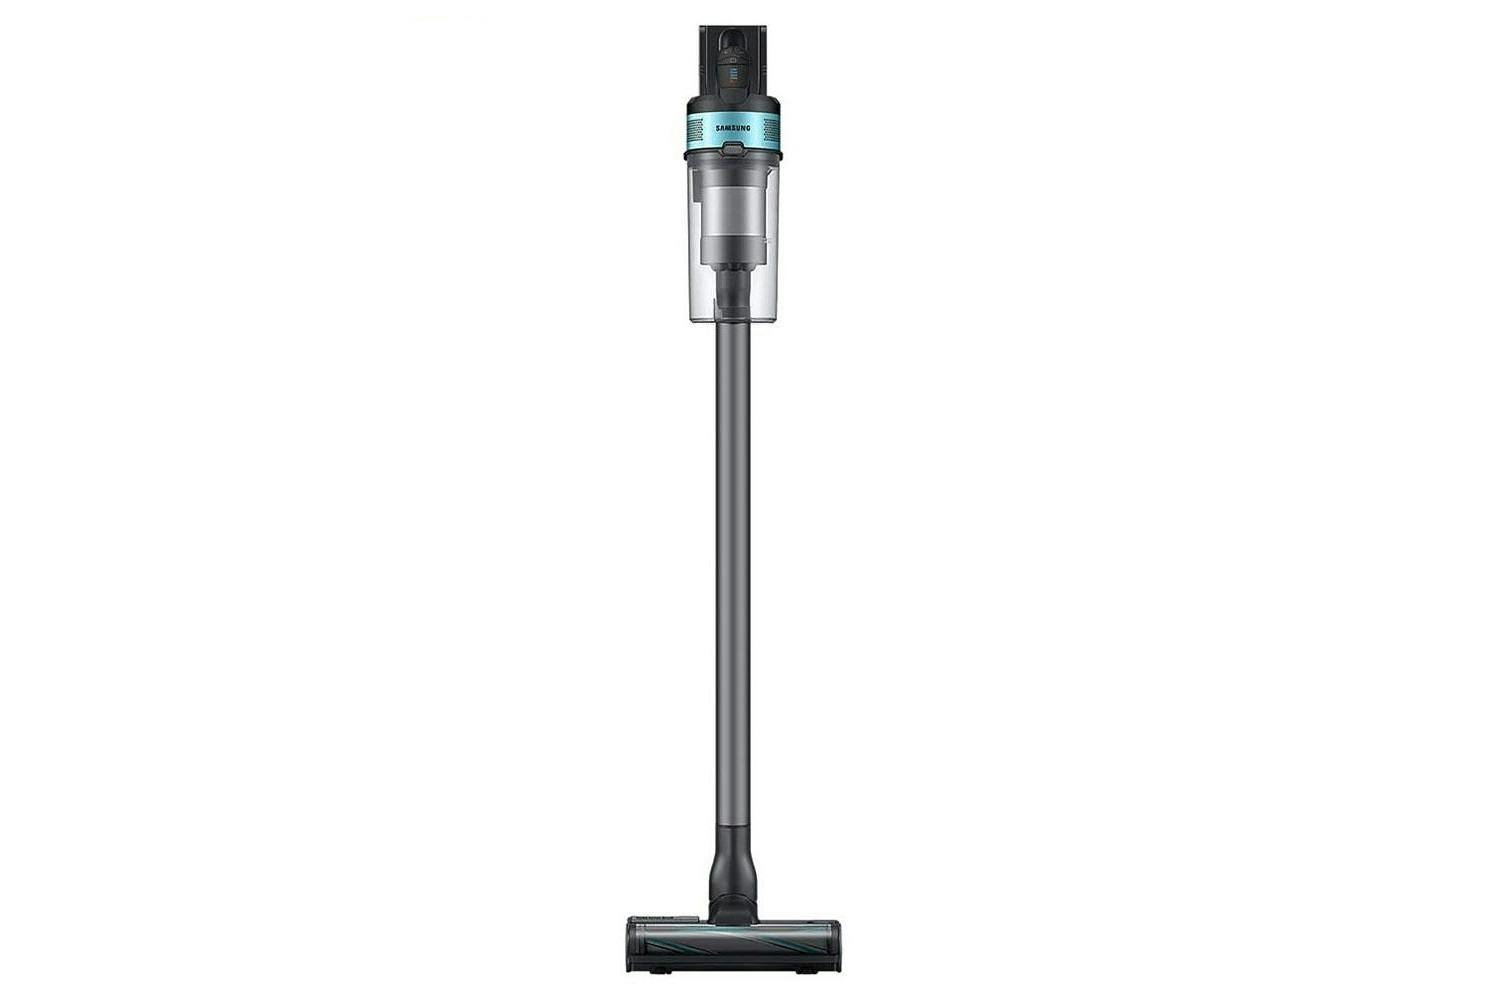 Samsung Jet 75E Pet Cordless Stick Vacuum Cleaner with Pet Tool | Mint